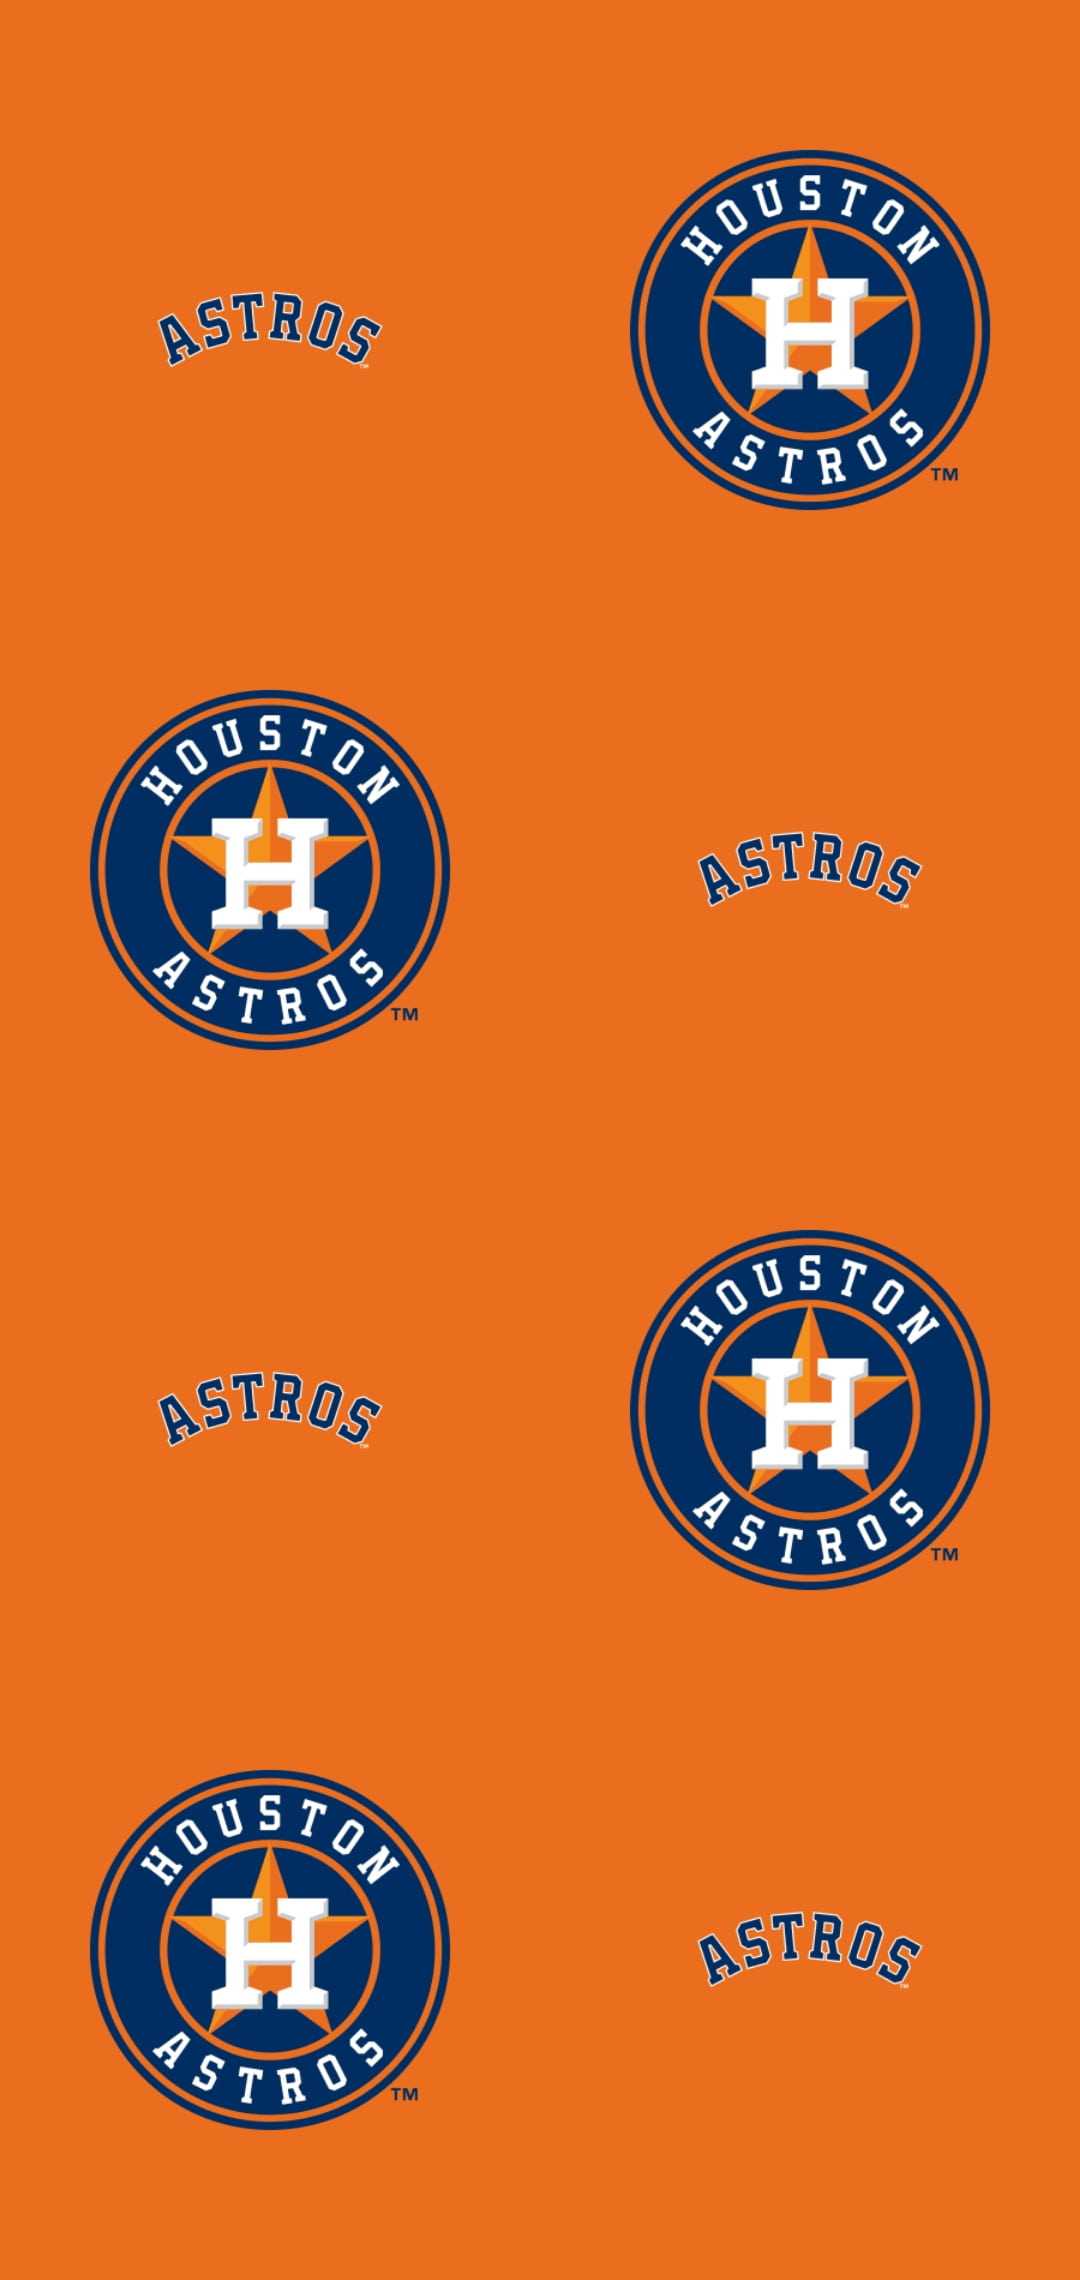 Astros Wallpaper - iXpap  Houston astros, Baseball wallpaper, Houston  astros baseball